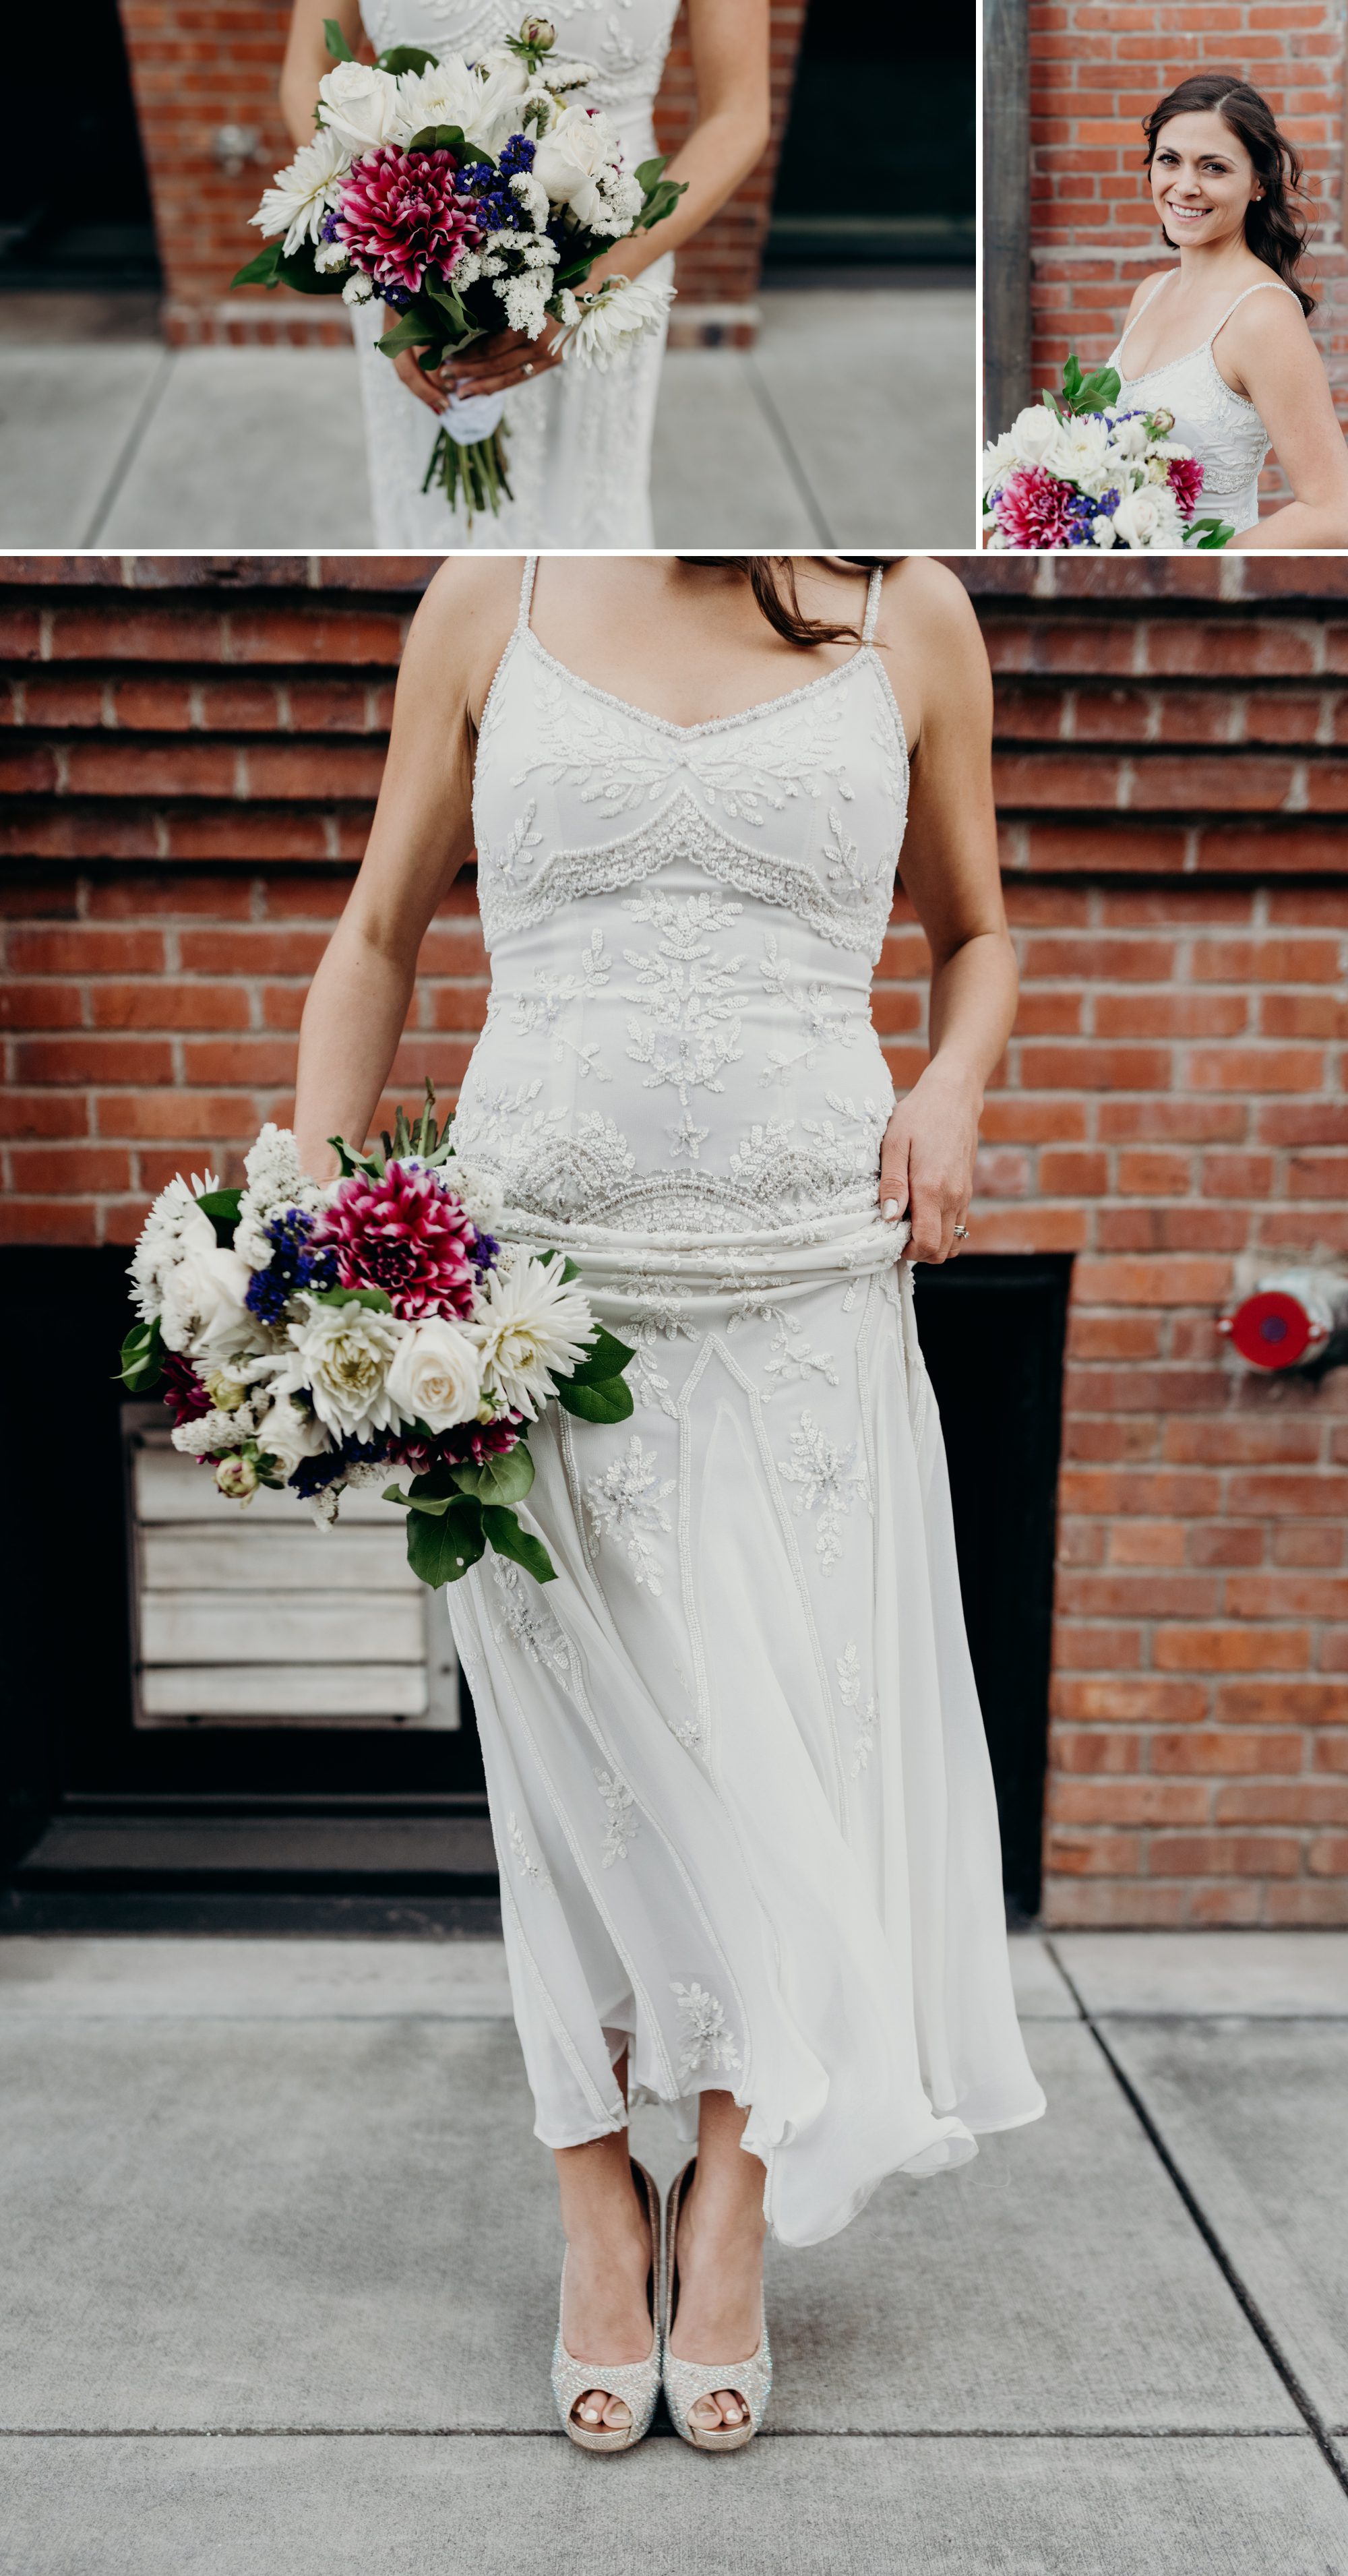 The beautiful bride! By Plaza del Toro wedding photographer Briana Morrison.